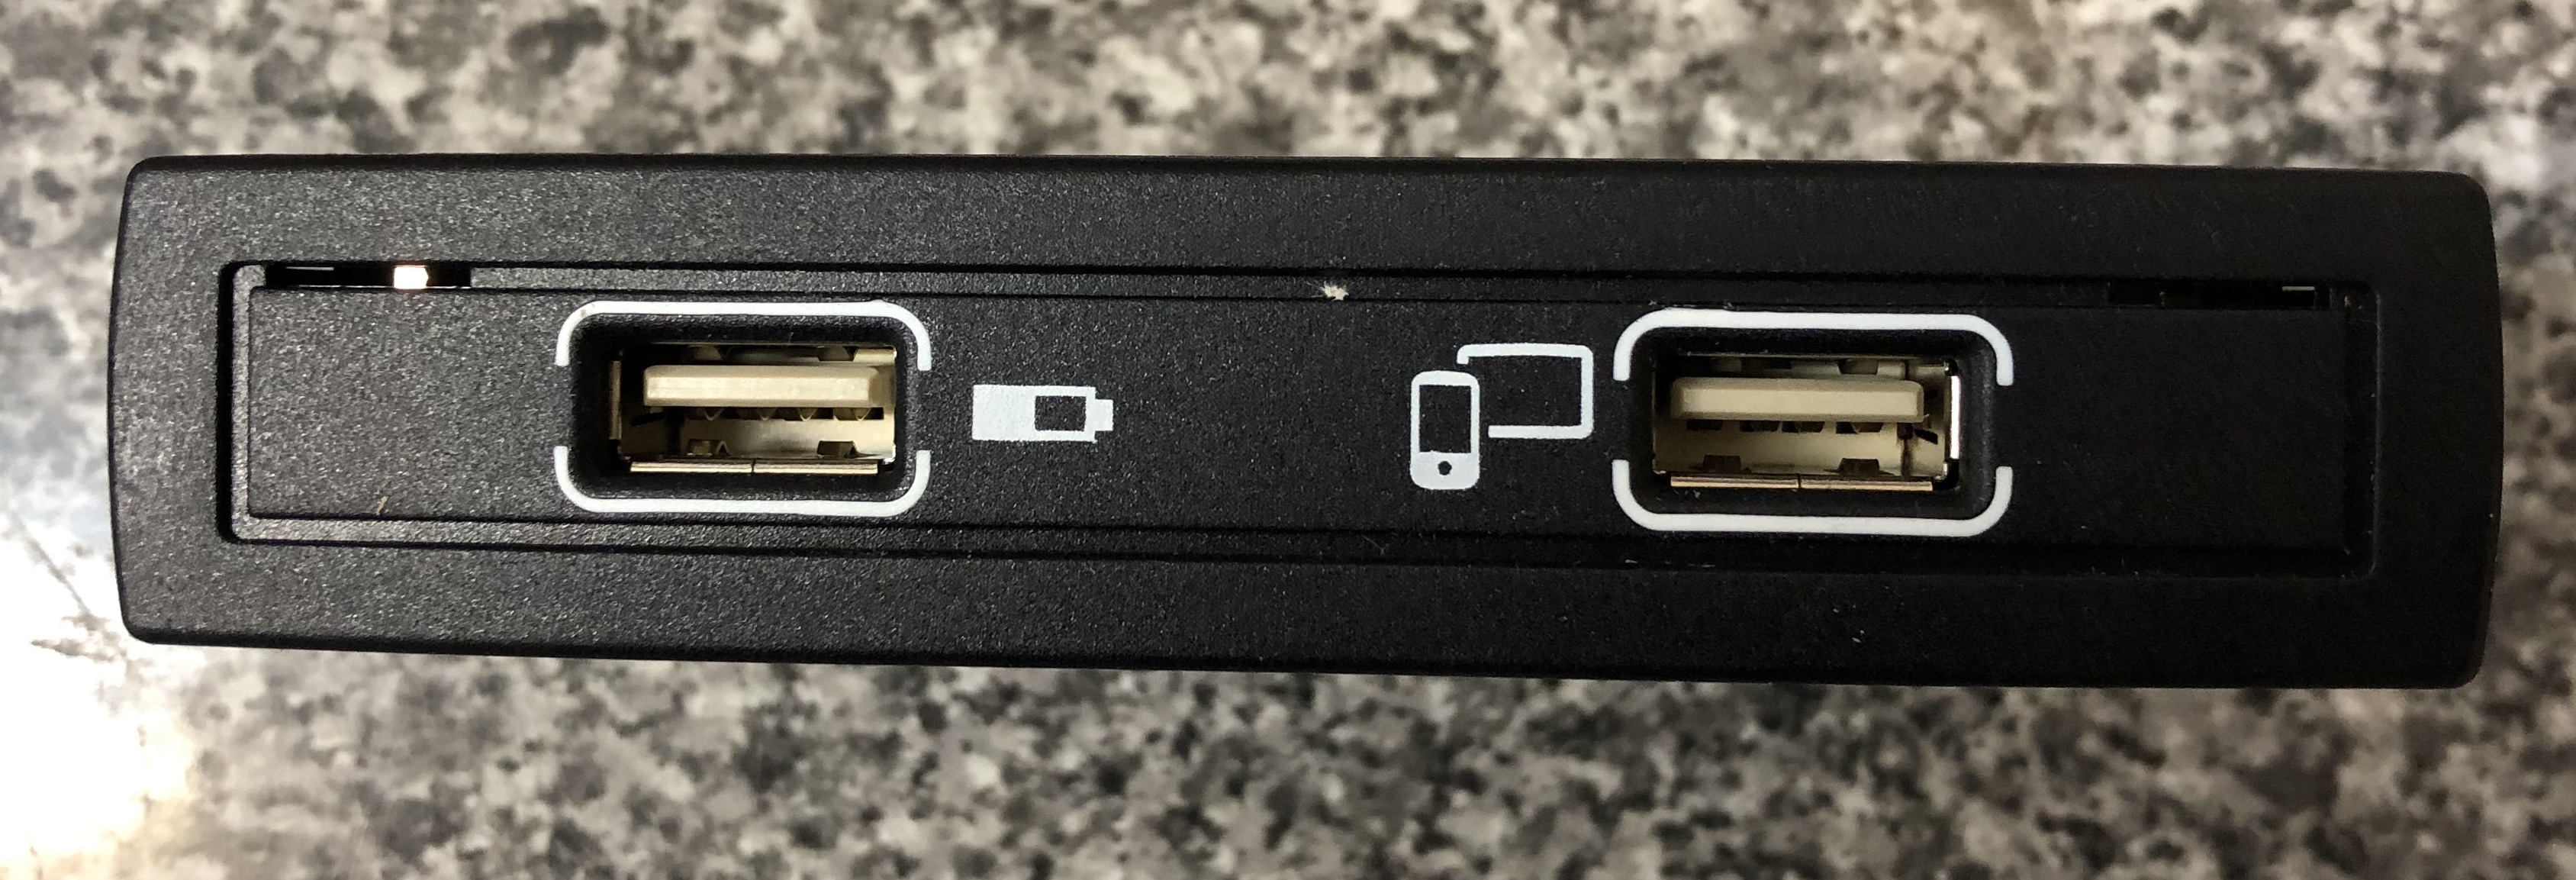 NTG5 Audio-20 USB Port.